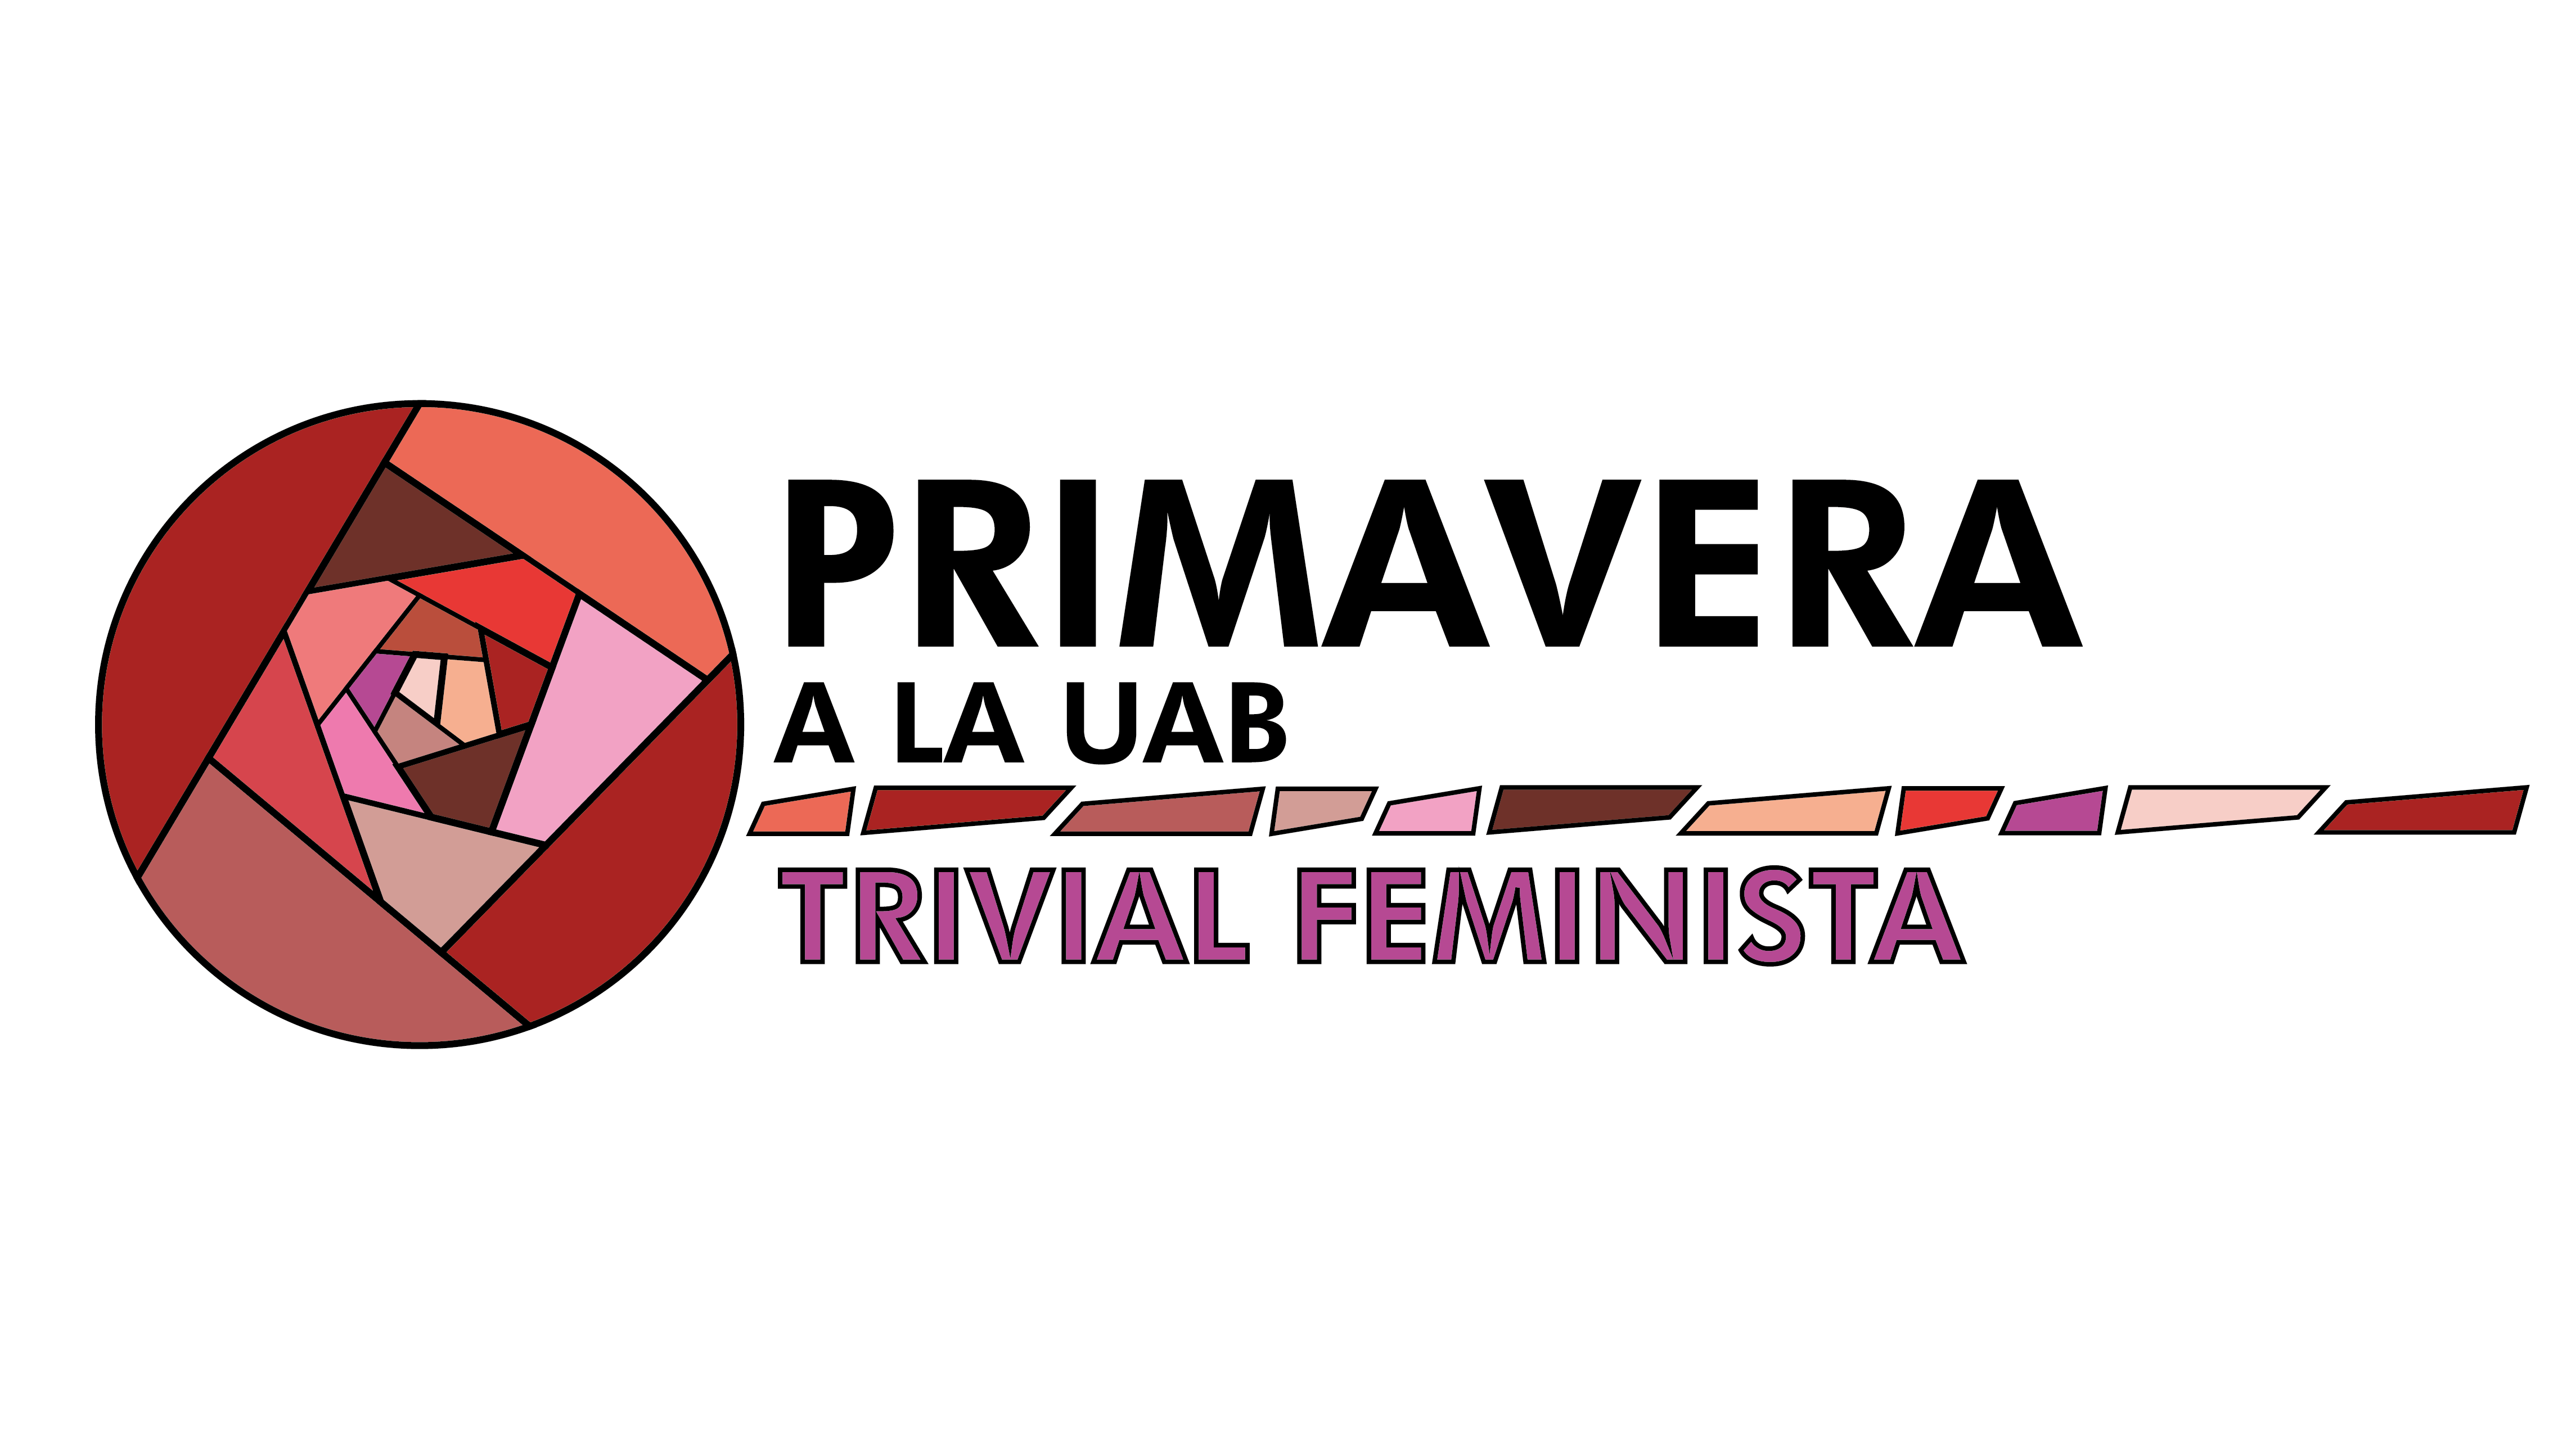 Primavera a la UAB, Concurs de Trivial Feminista